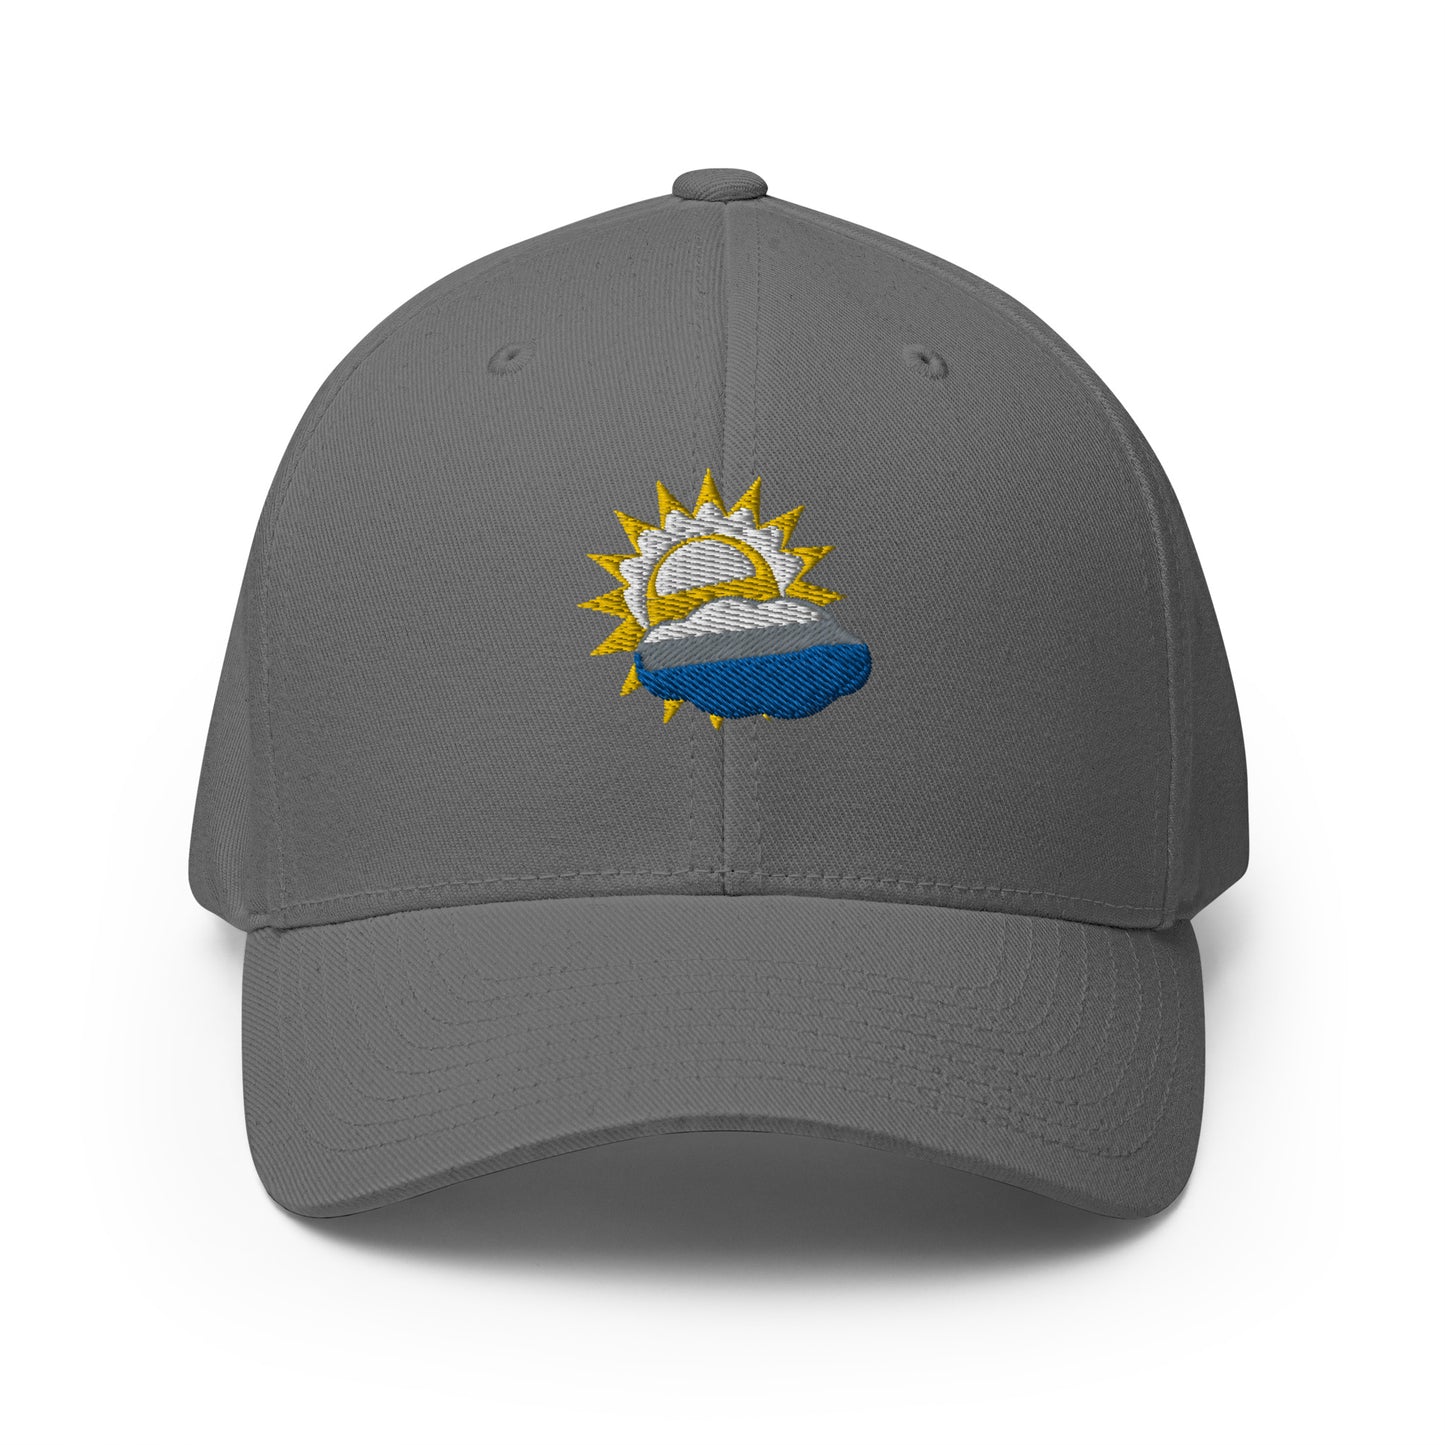 Baseball Cap with Sun Cloud Symbol